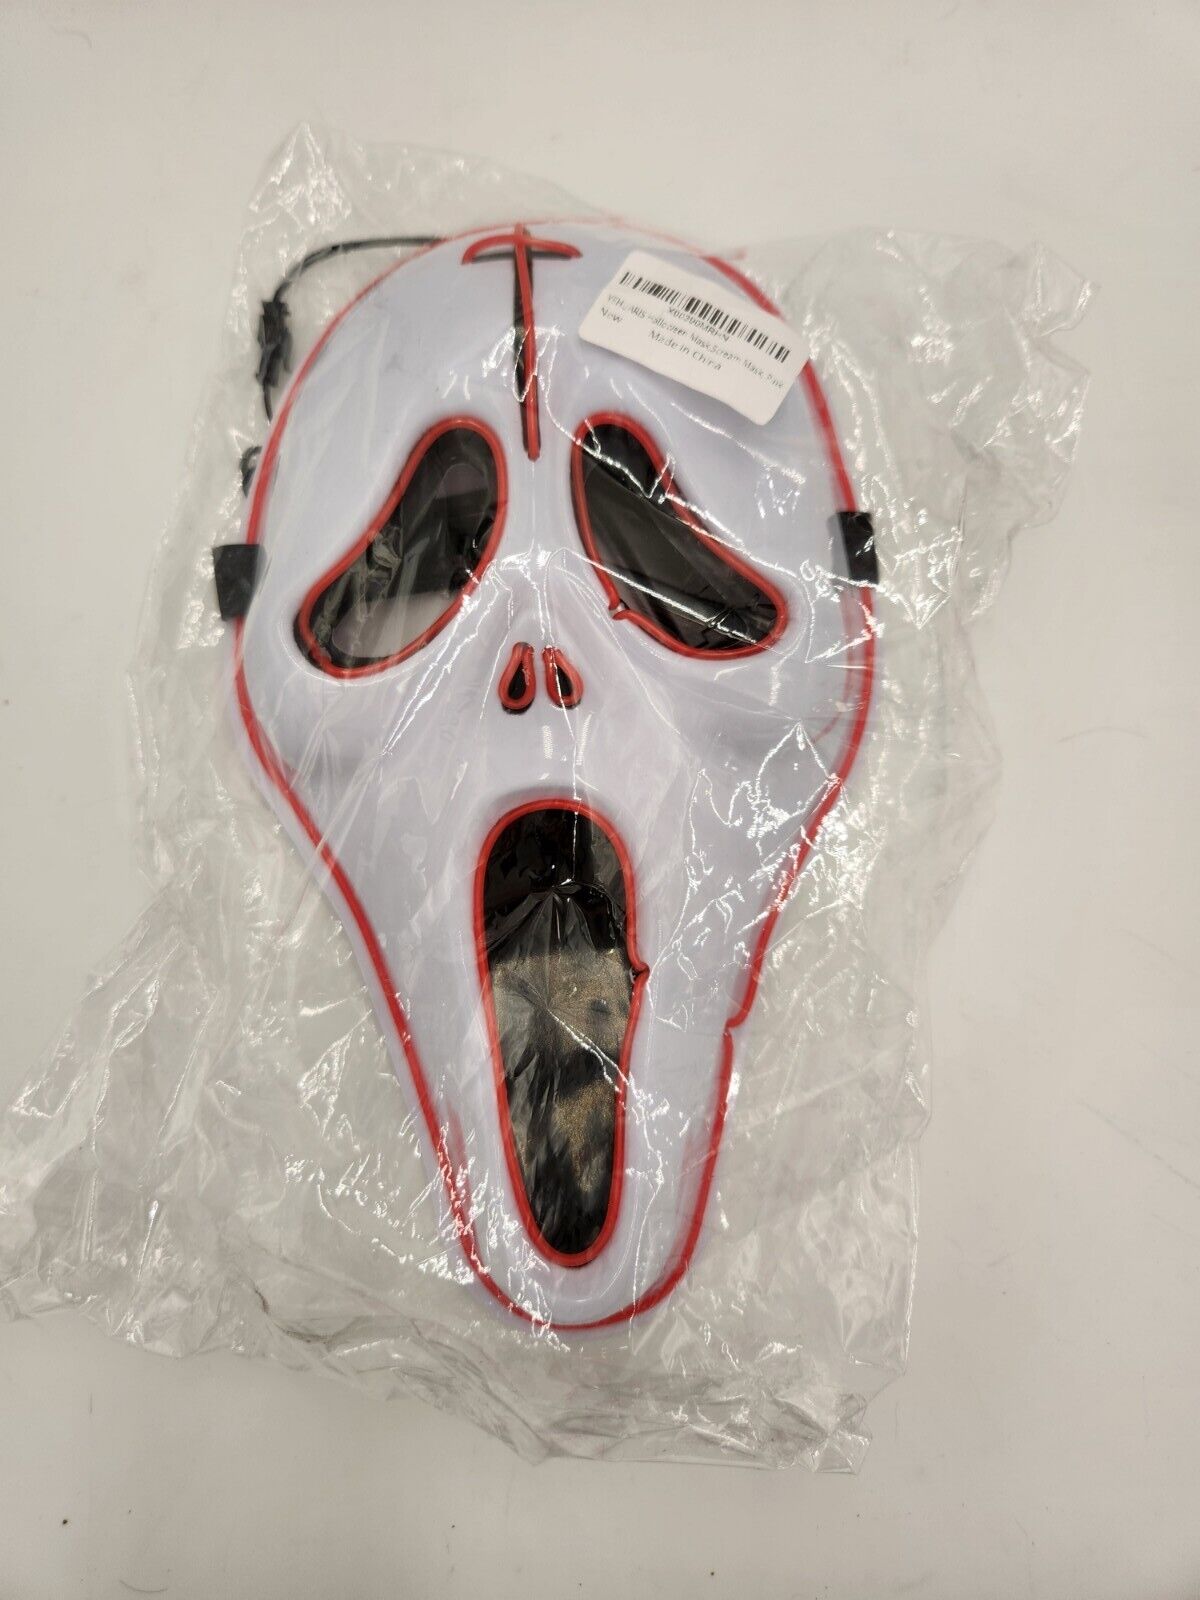 LED Light Up Scream Mask with Cross Purge Halloween Costume Mask - NIP